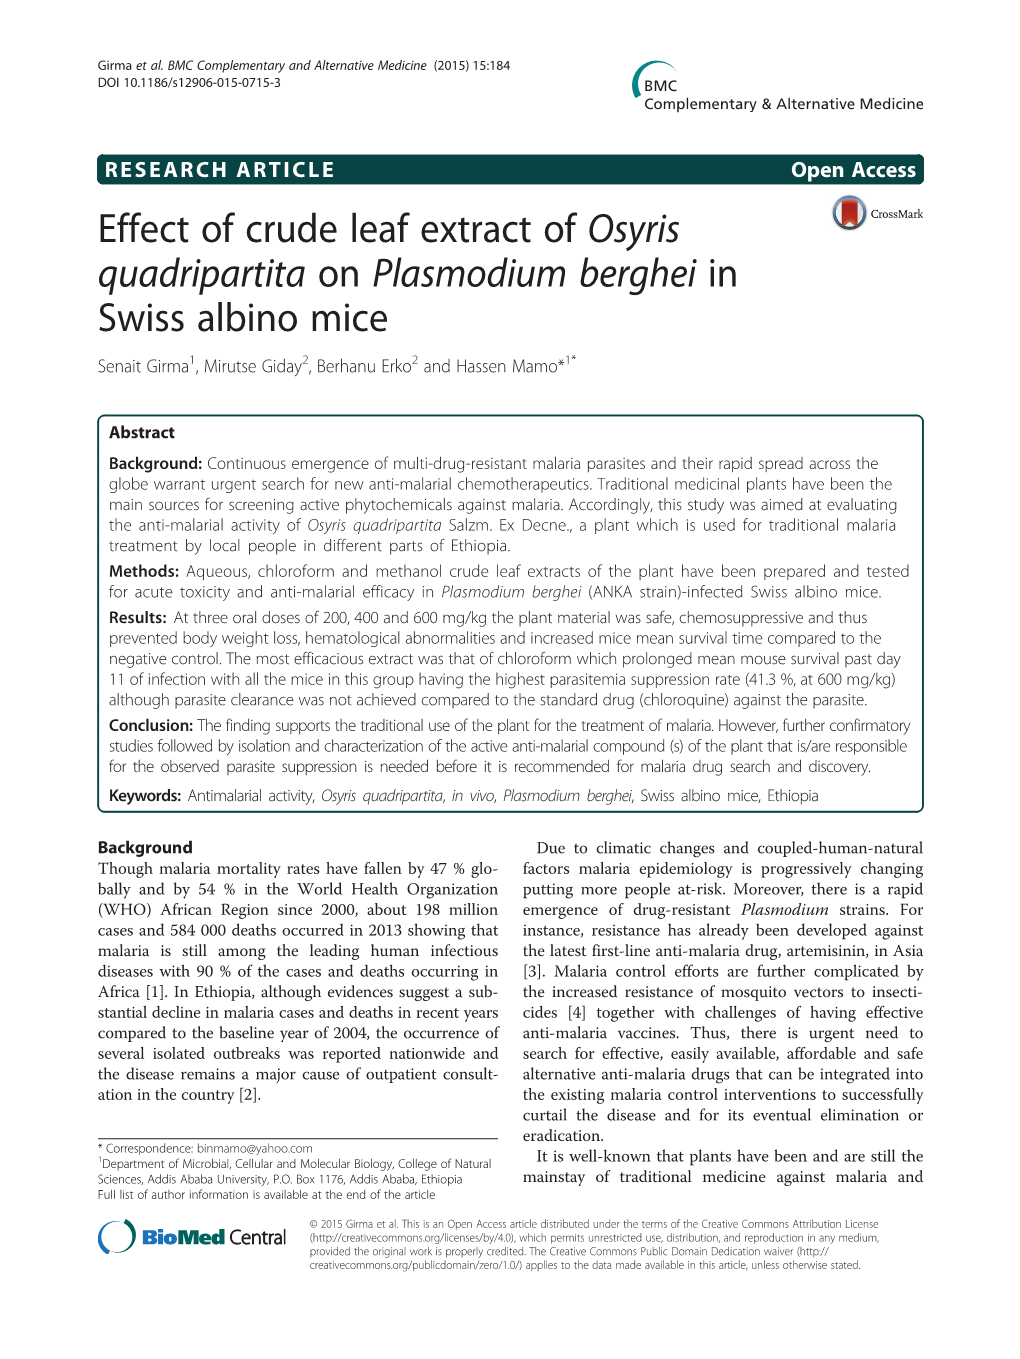 Effect of Crude Leaf Extract of Osyris Quadripartita on Plasmodium Berghei in Swiss Albino Mice Senait Girma1, Mirutse Giday2, Berhanu Erko2 and Hassen Mamo*1*